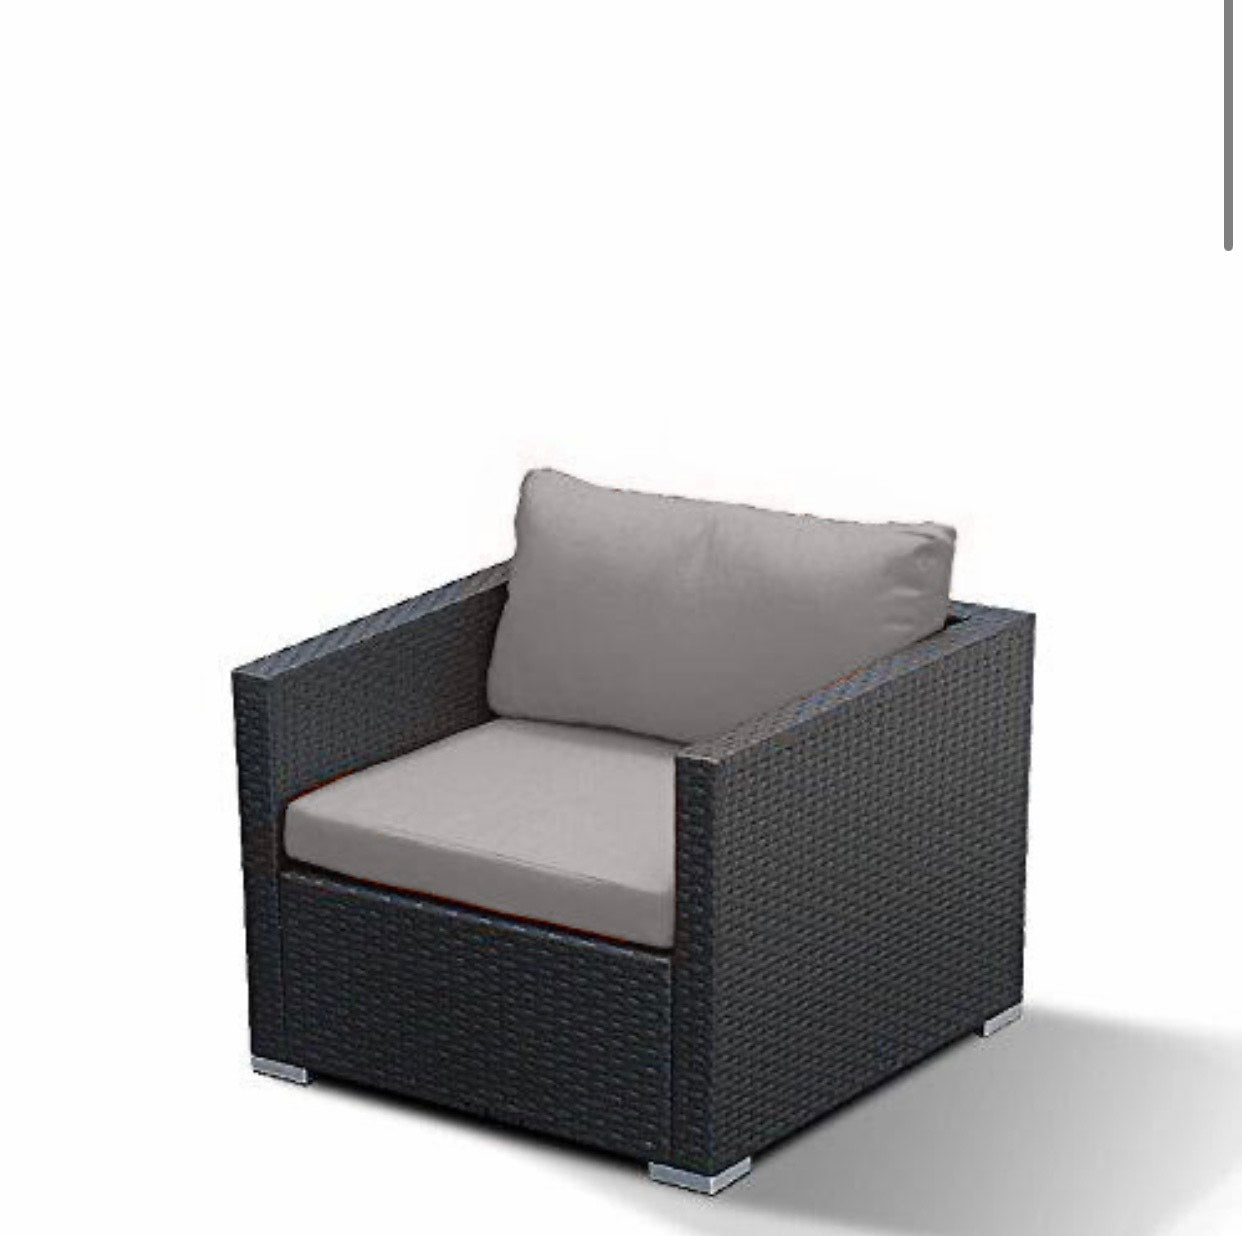 Light Gray Club Chair Outdoor Patio Furniture Espresso Brown Wicker